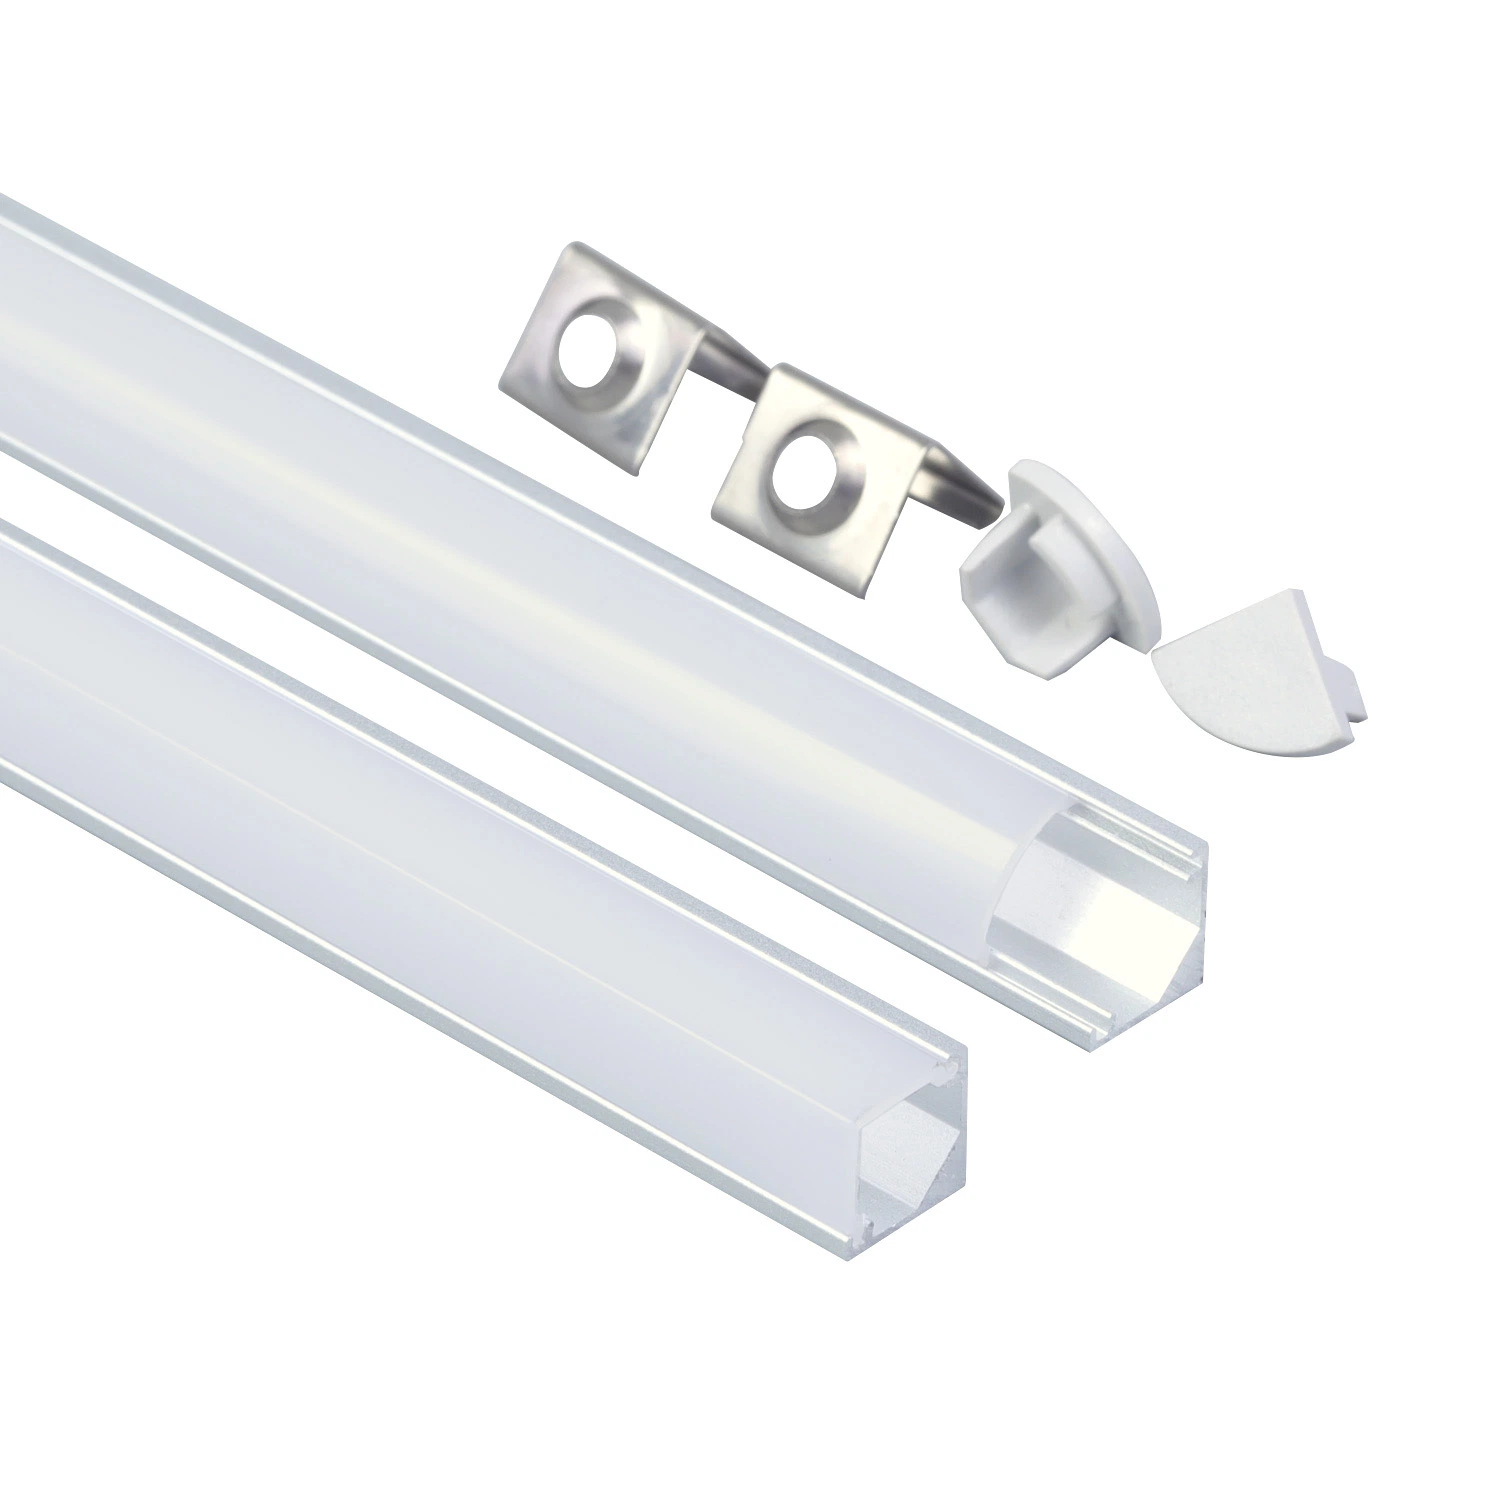 Tw0808c Right Angle Corner LED Aluminium Profile for 8mm Cabinet Strip LED Bar Light